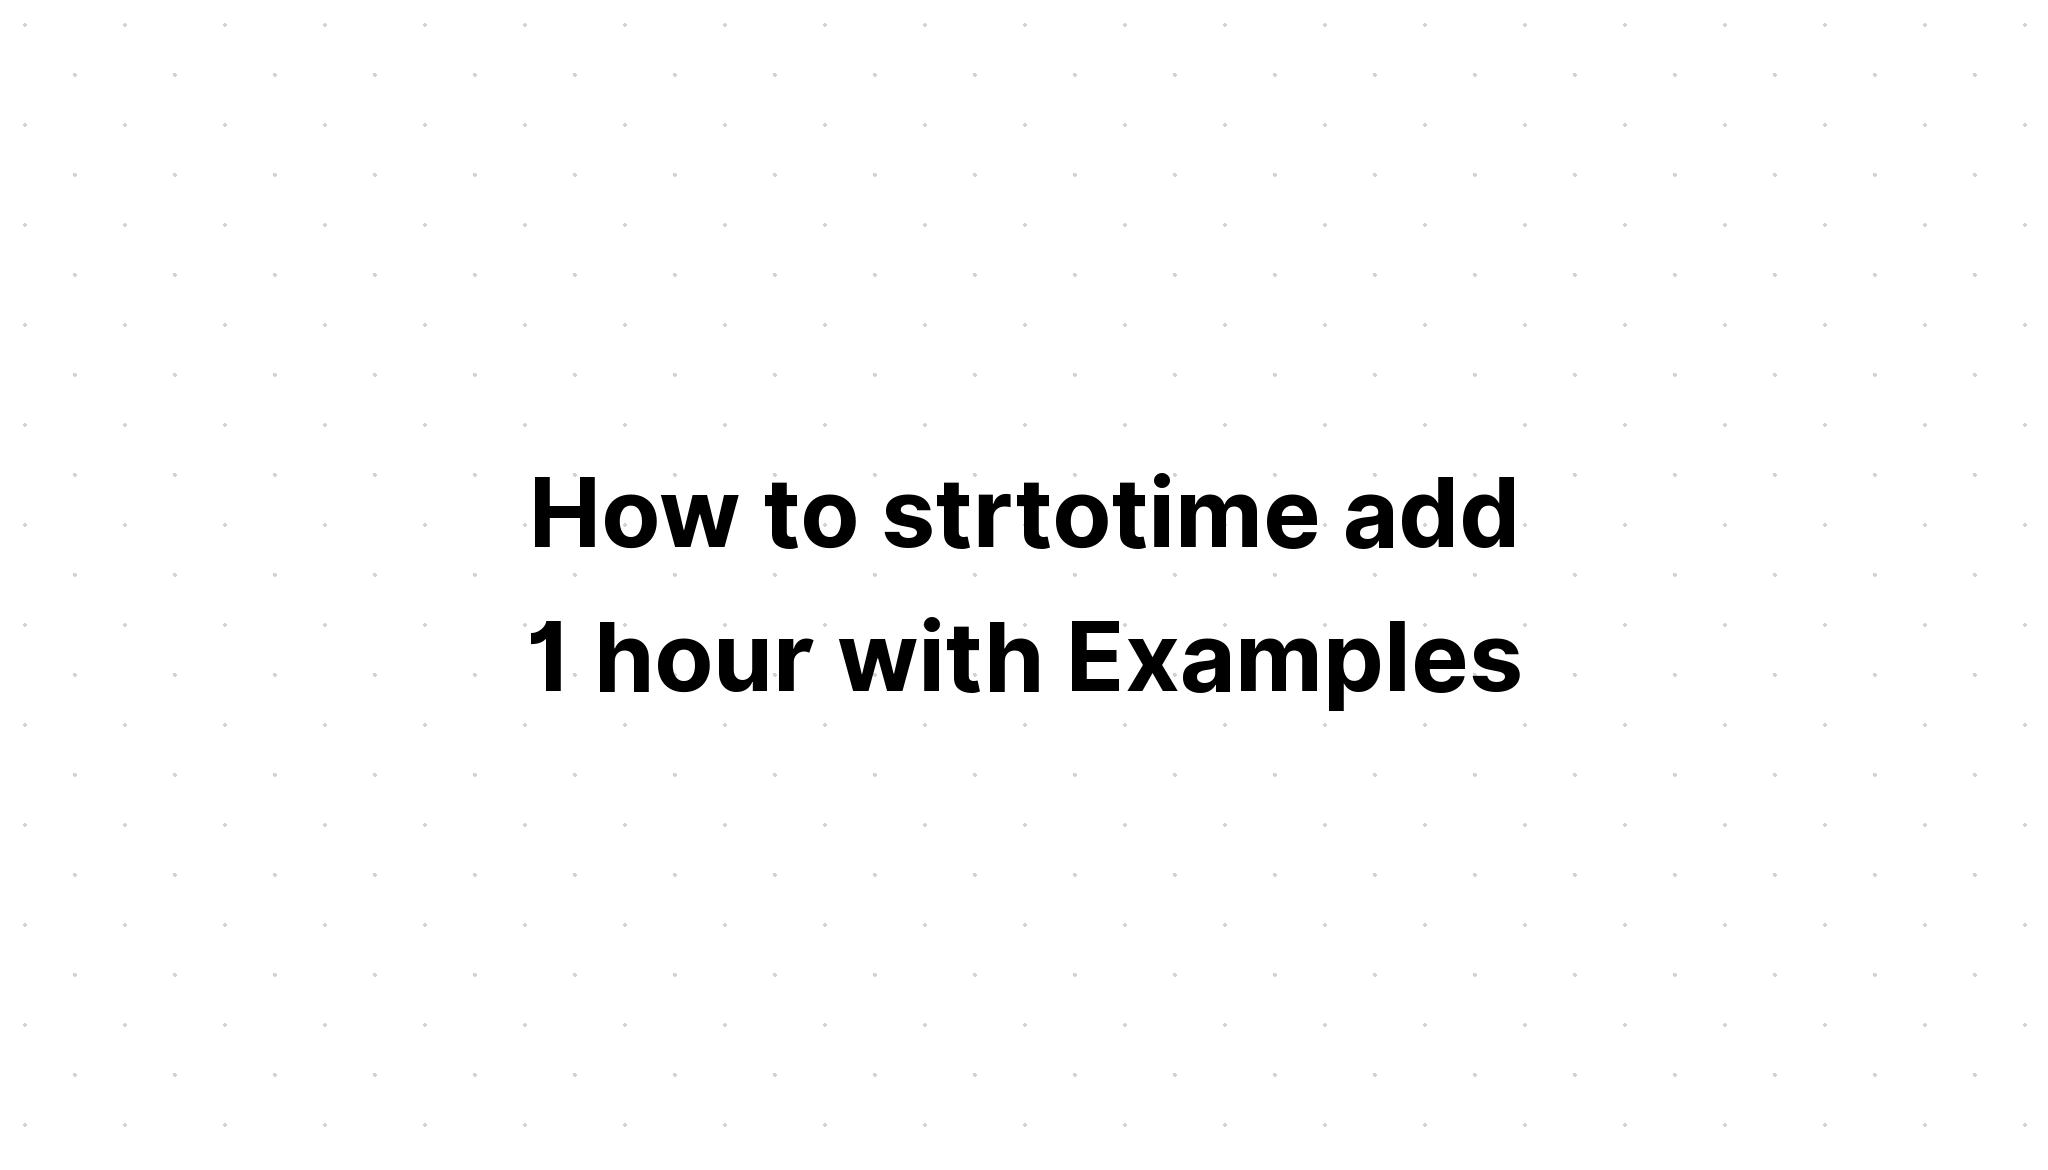 Cách strtotime thêm 1 giờ với các ví dụ